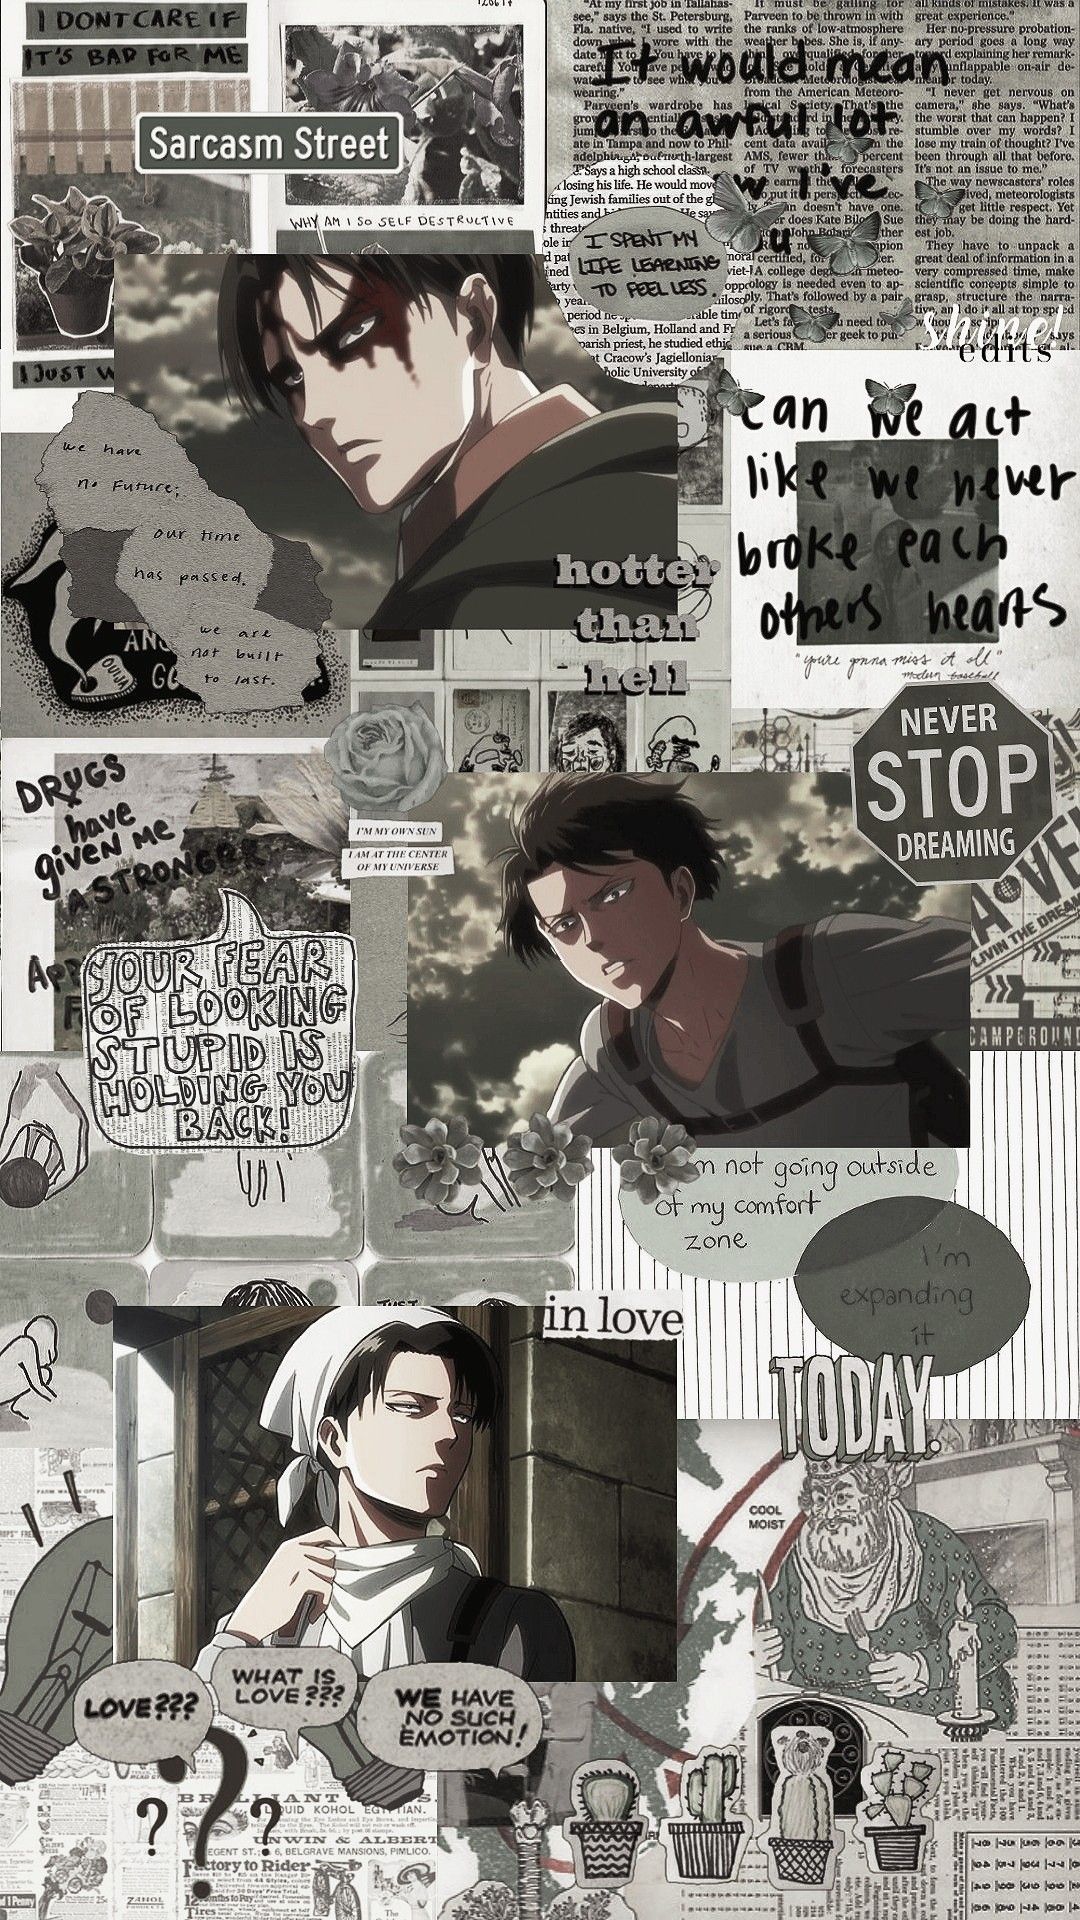 Levi Ackerman. Anime wallpaper iphone .com